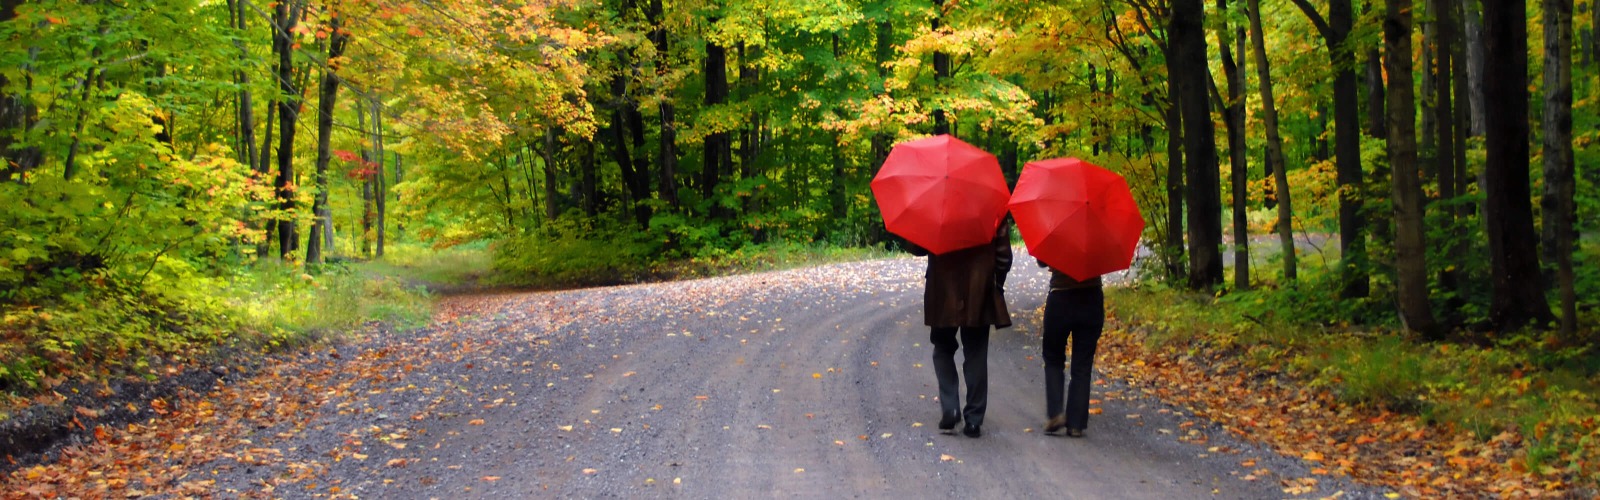 Couple walking under red umbrellas